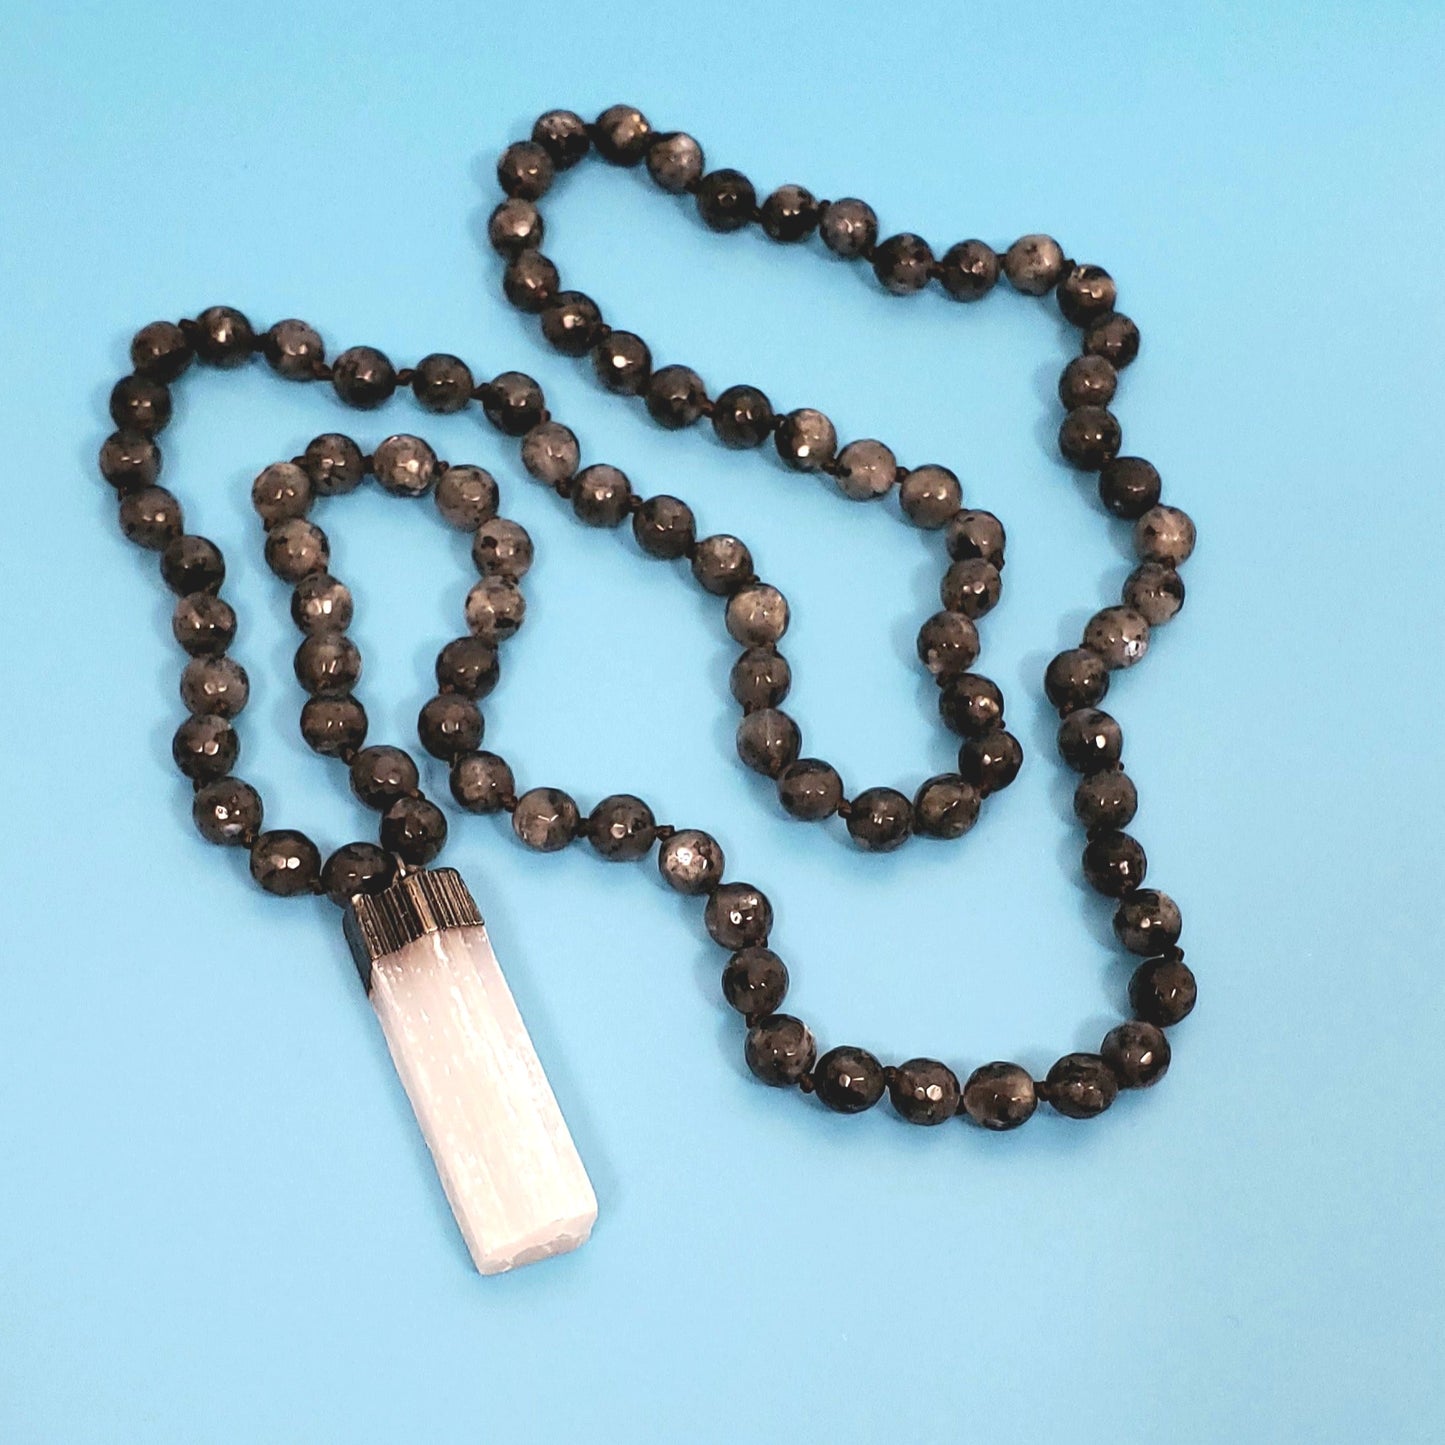 Black Labradorite Necklace with Selenite Pendant